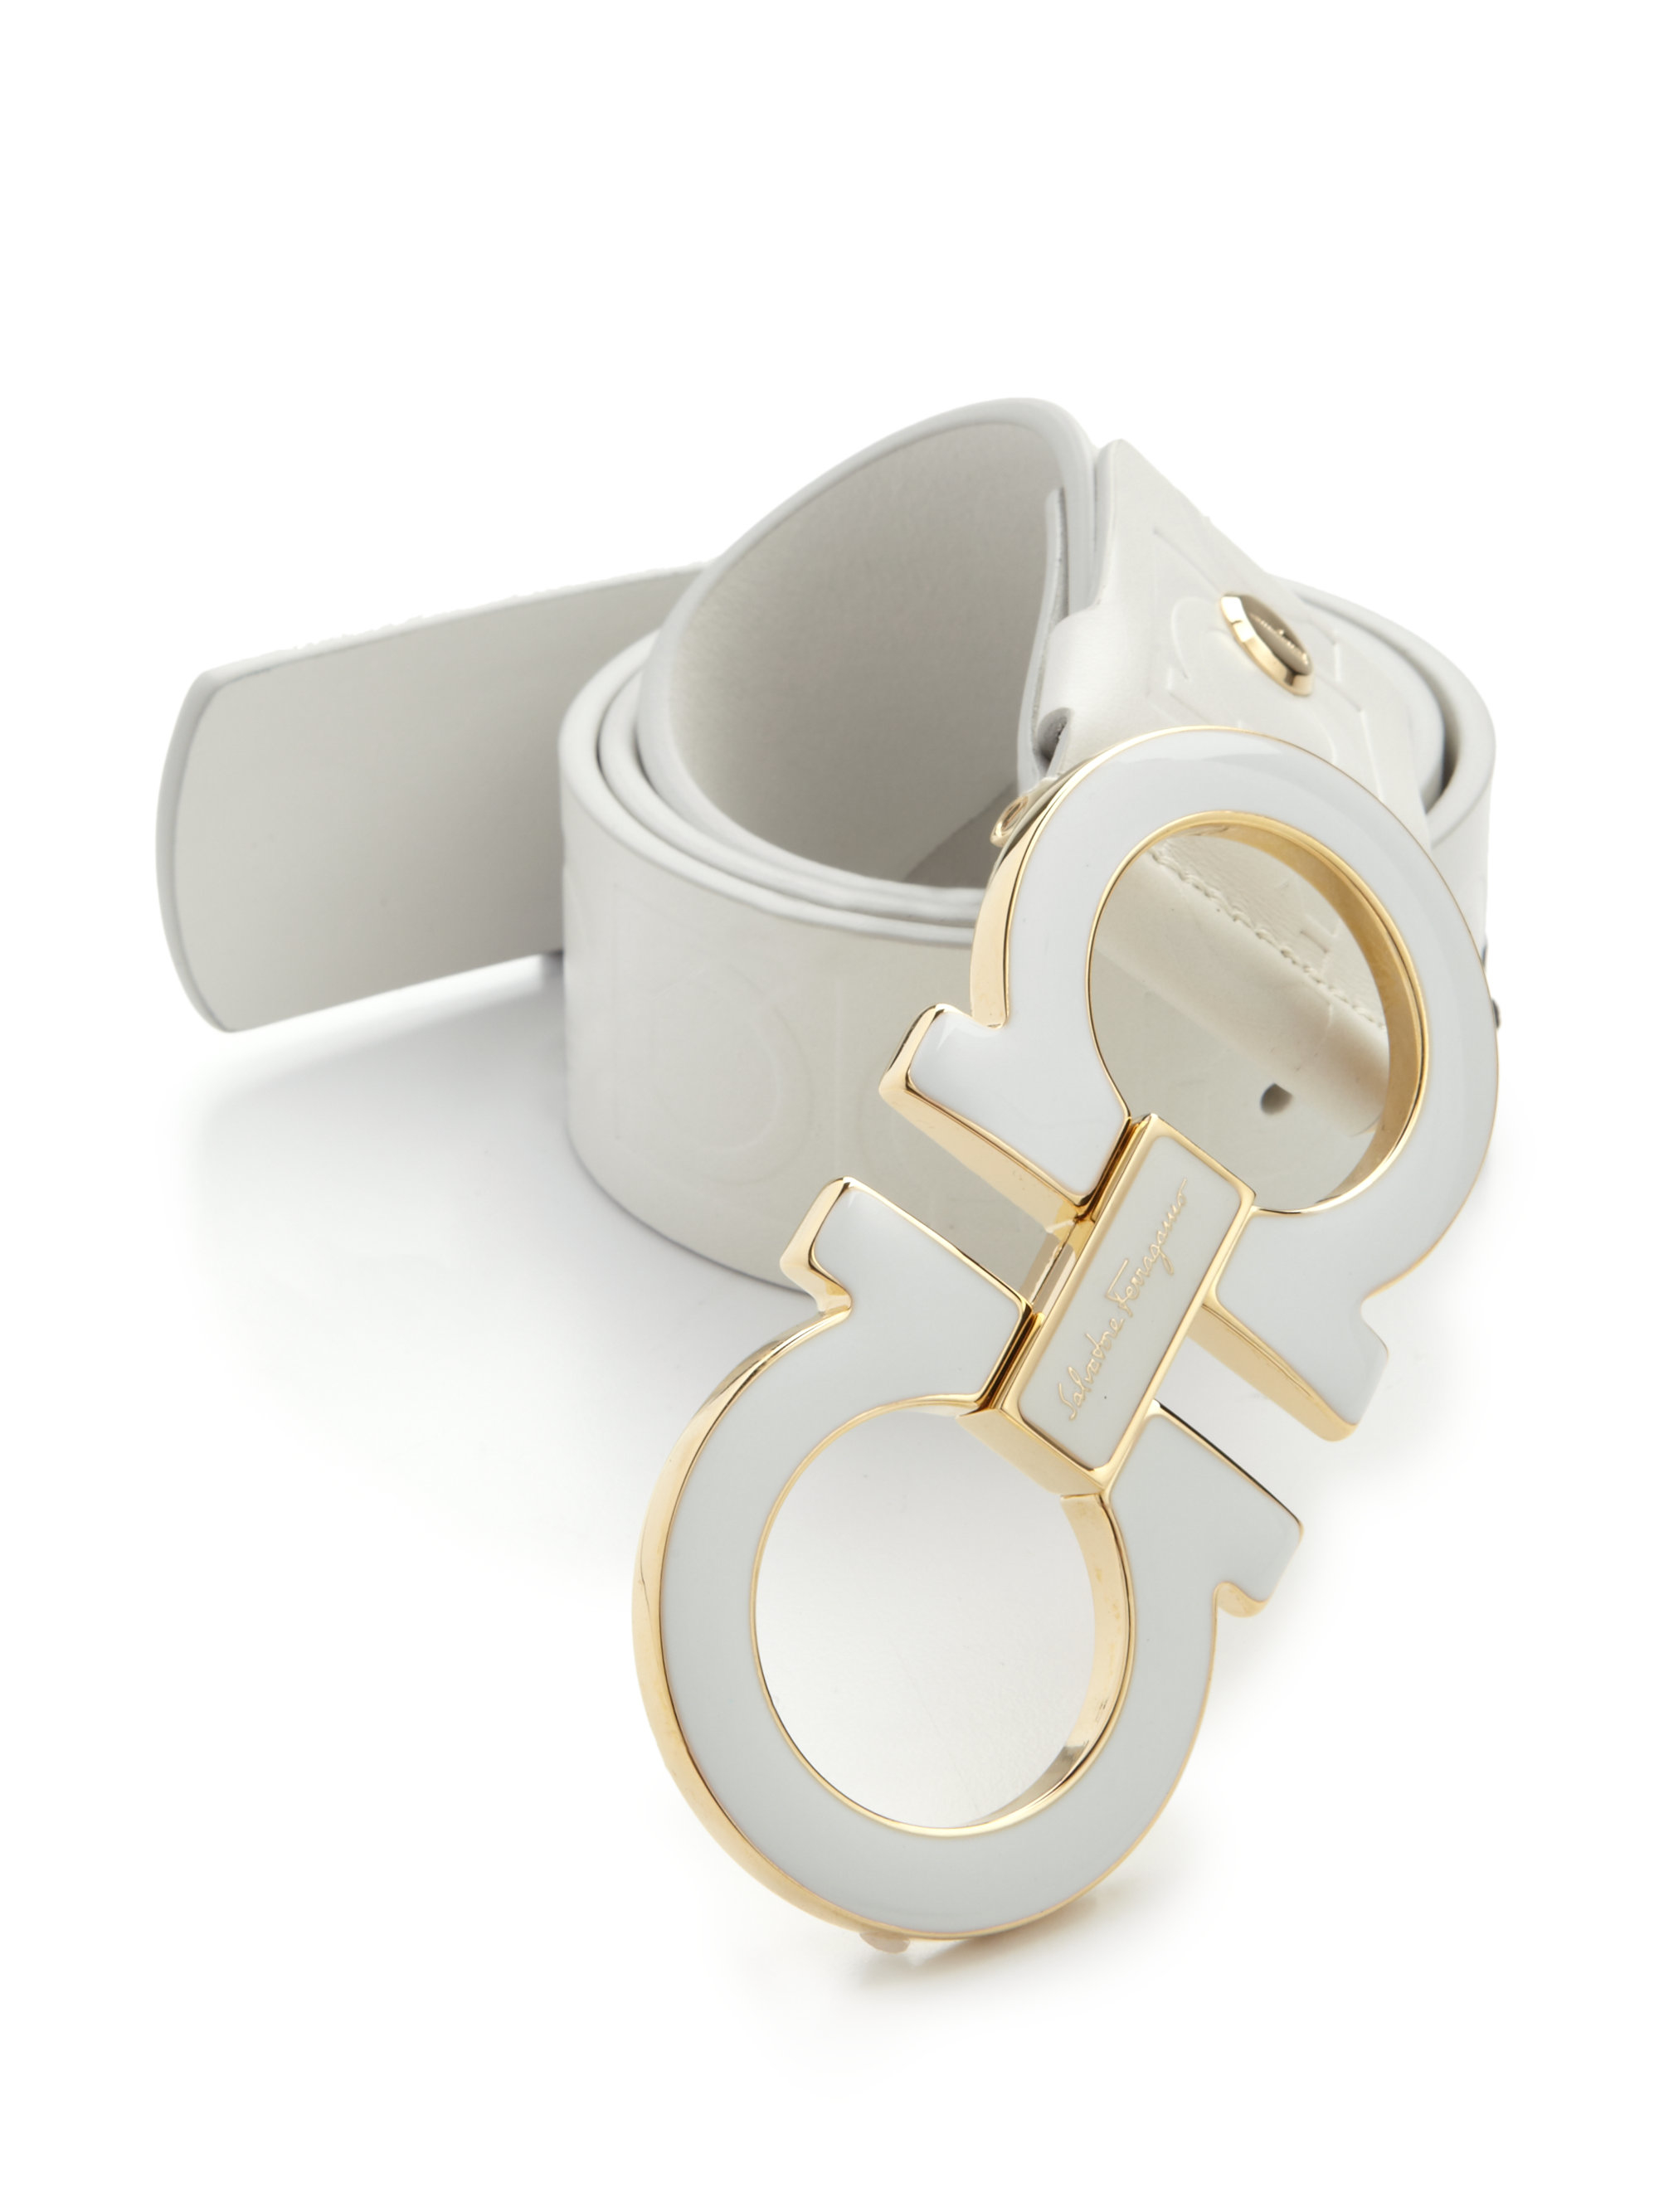 Ferragamo Gancini Leather Belt in White for Men | Lyst